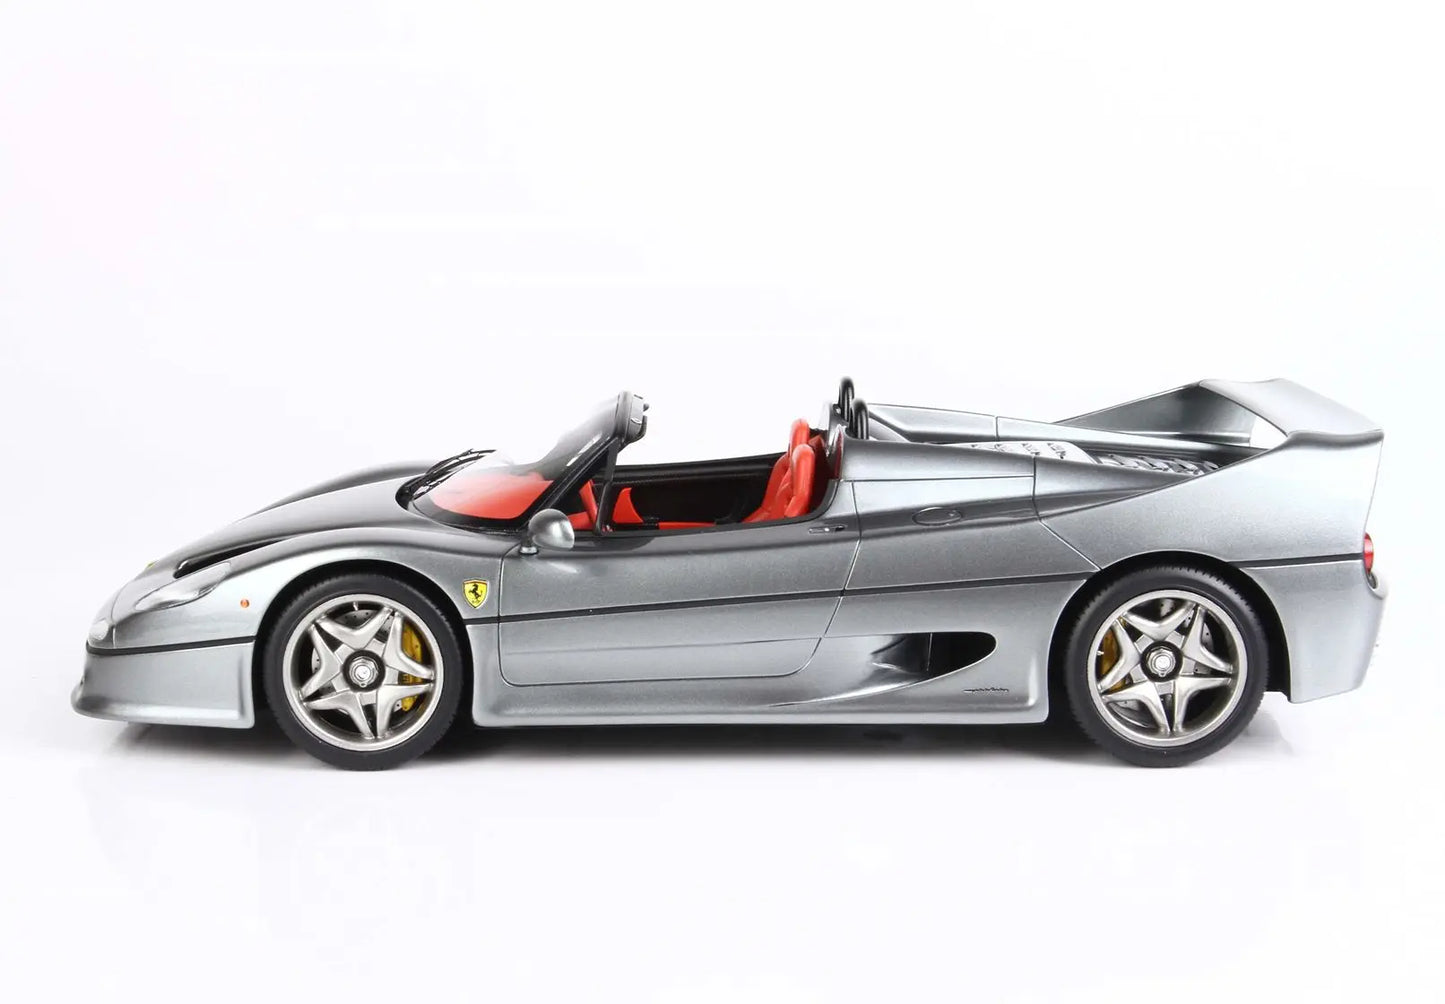 Ferrari F50 1995 Spider Version Metallic Iron Grey 1:18 Scale - Perfect Diecast